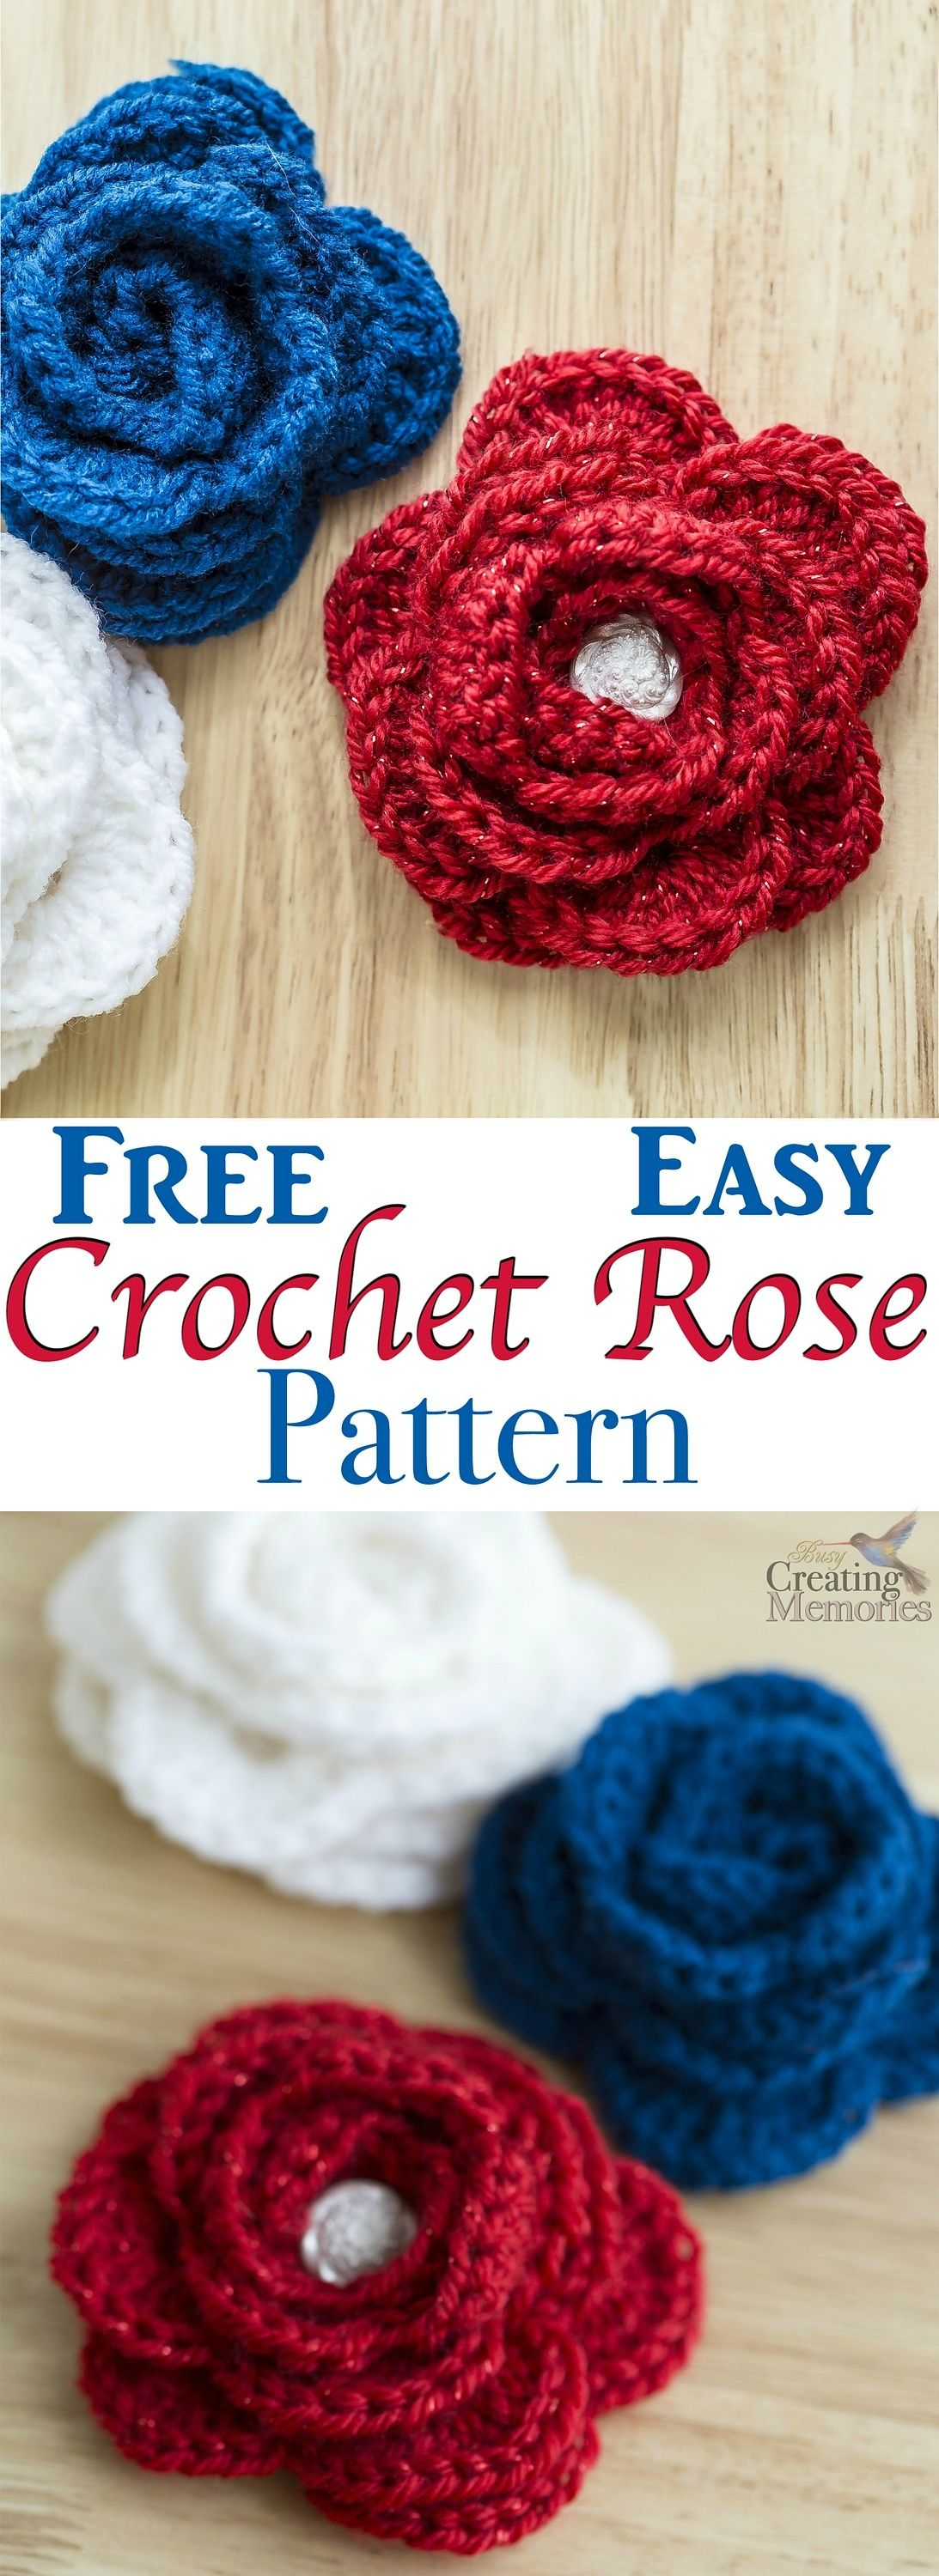 Crochet Rose Pattern Free Easy Crochet Rose Pattern Crochet Ideas And Inspiration